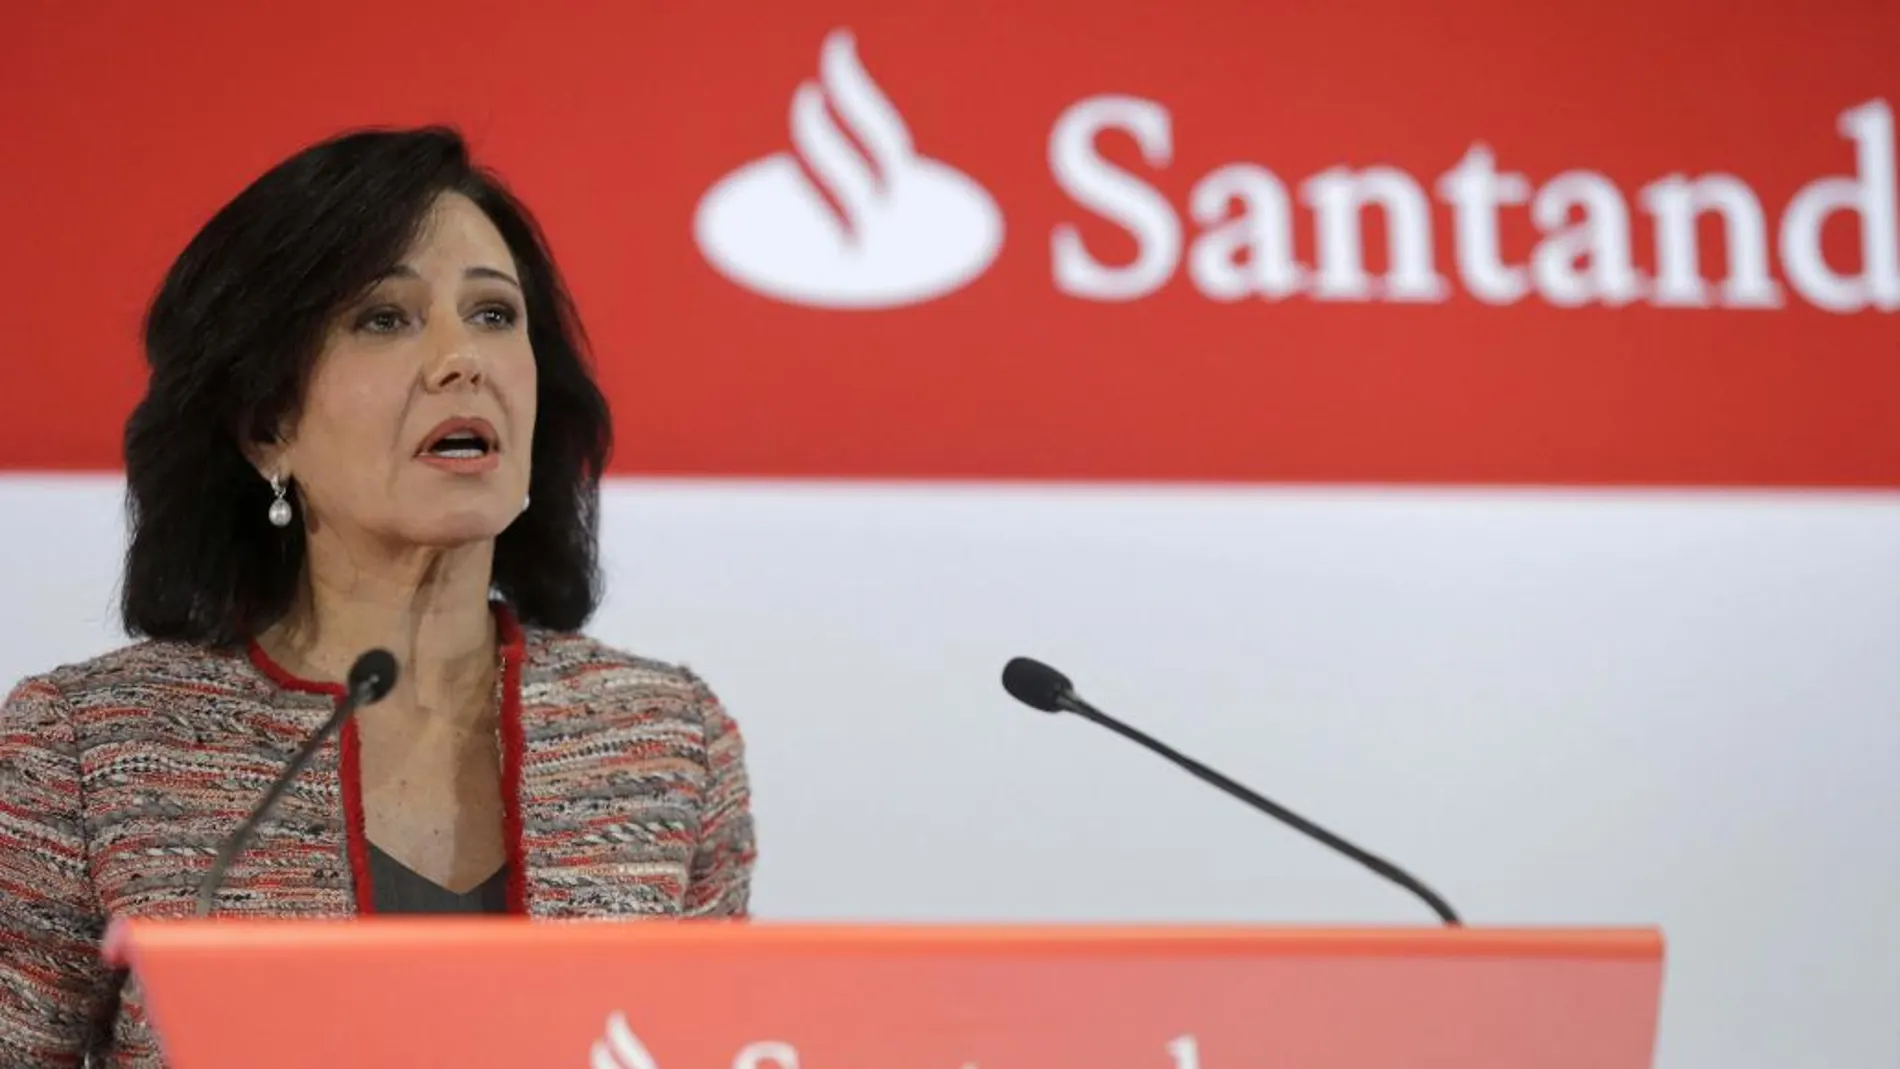 La presidenta del Banco Santander, Ana Patricia Botín,